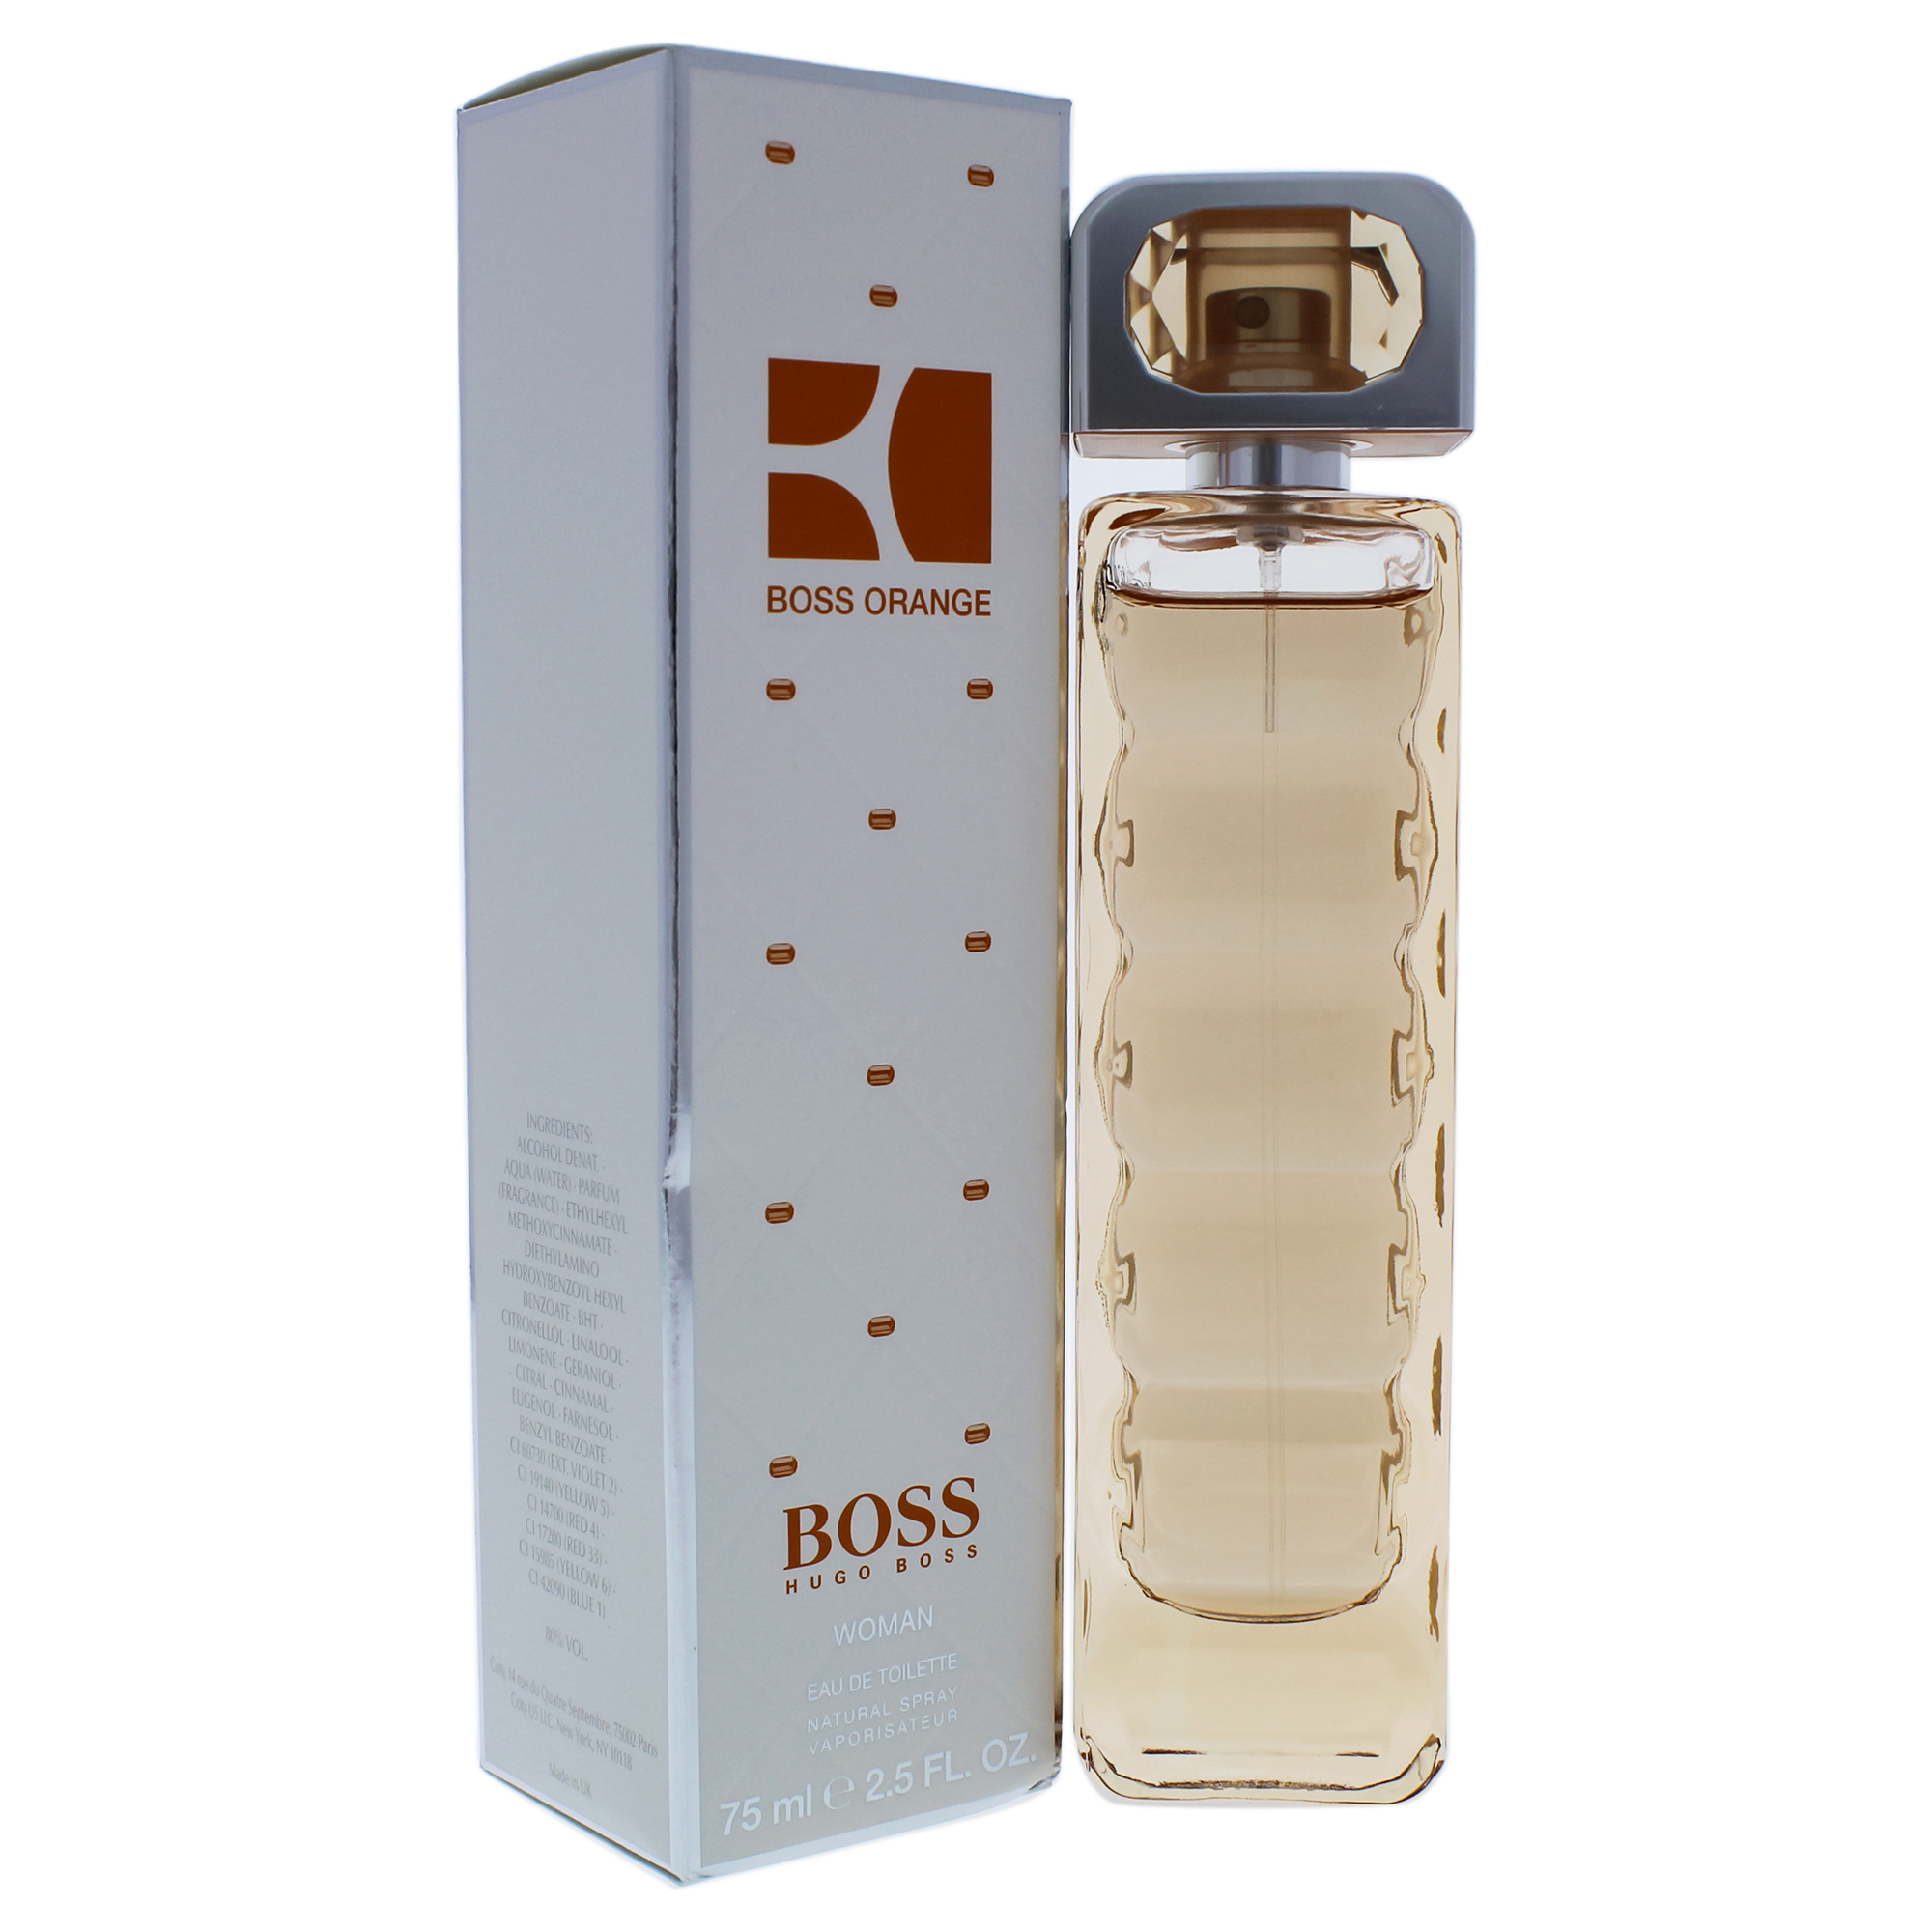 HUGO BOSS Boss Orange Eau de Toilette, Perfume for Women, 2.5 Oz - image 3 of 3